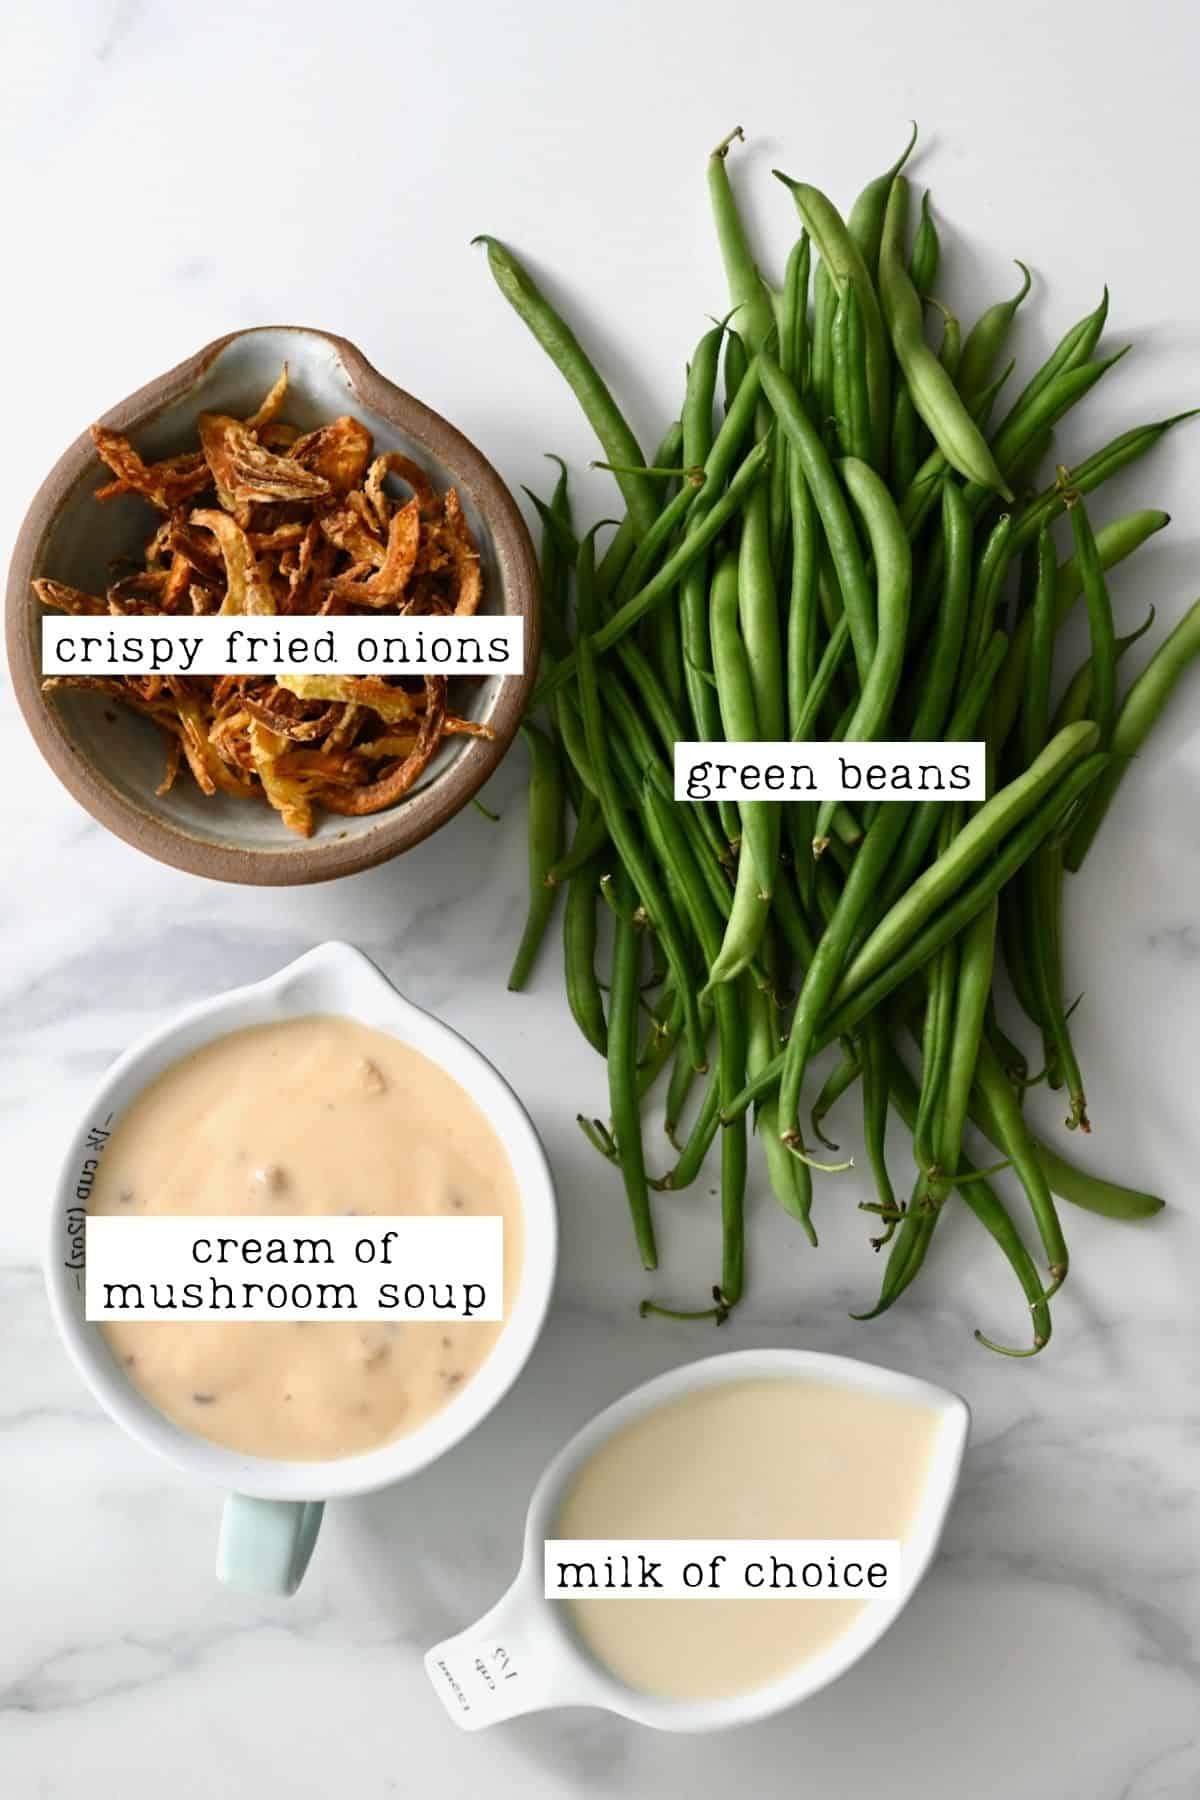 Ingredients for Green Bean Casserole